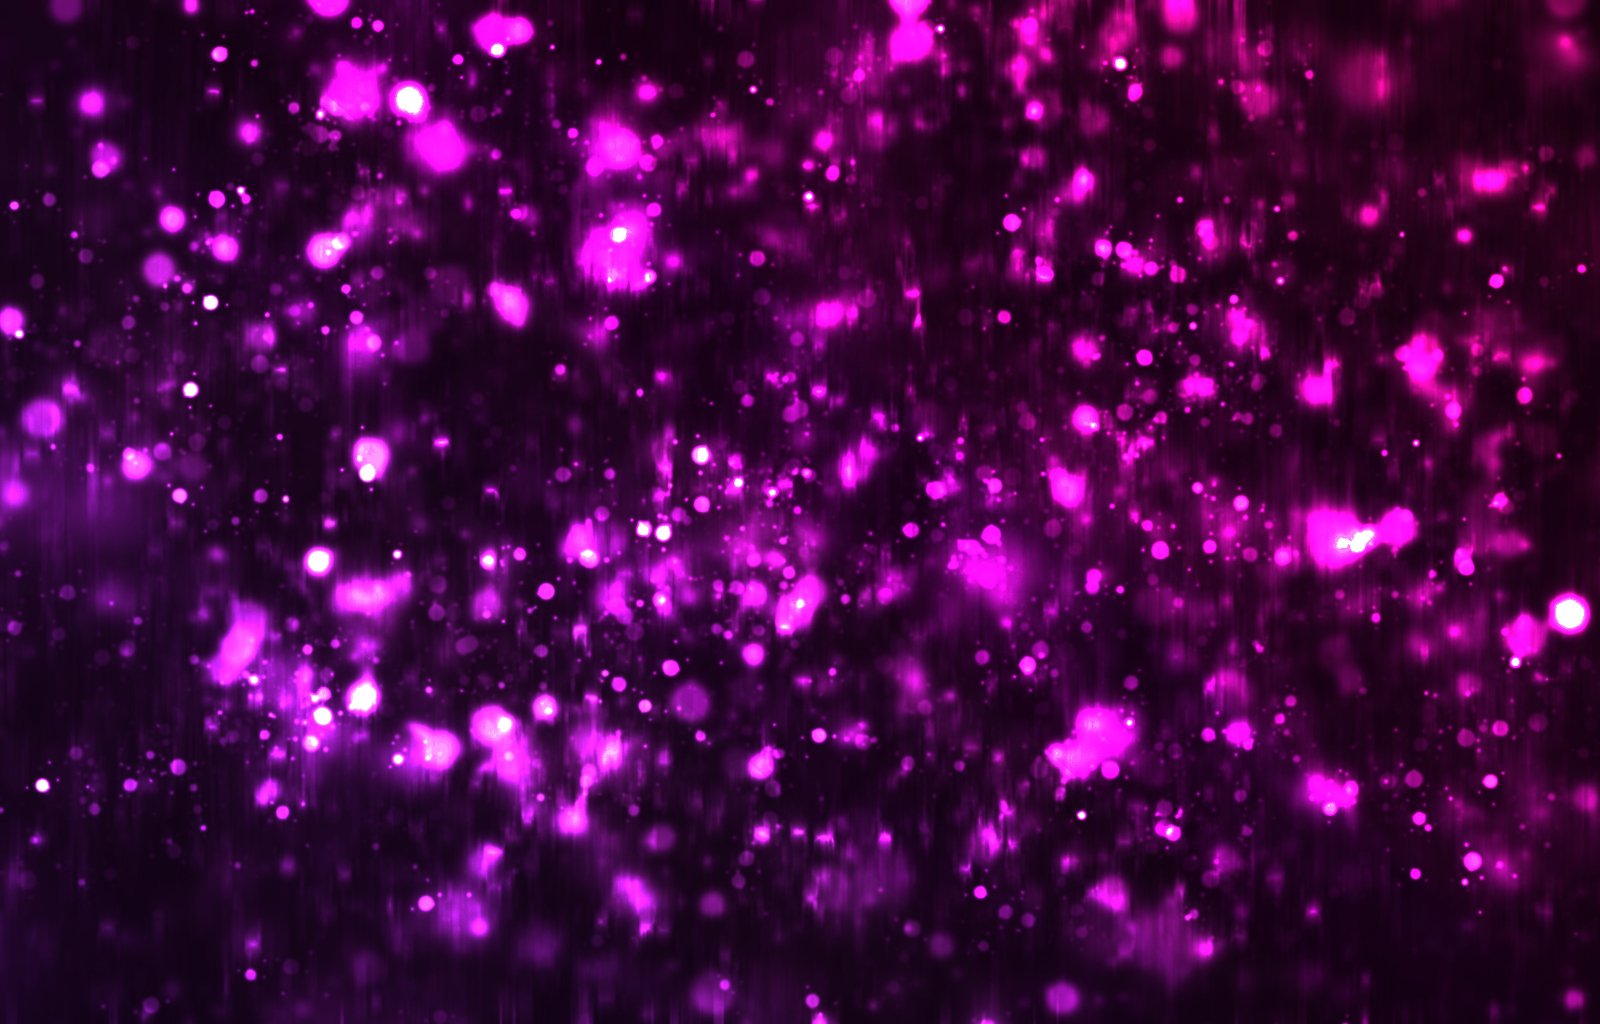 purple rain Wallpaper and Background Image | 1600x1024 ...